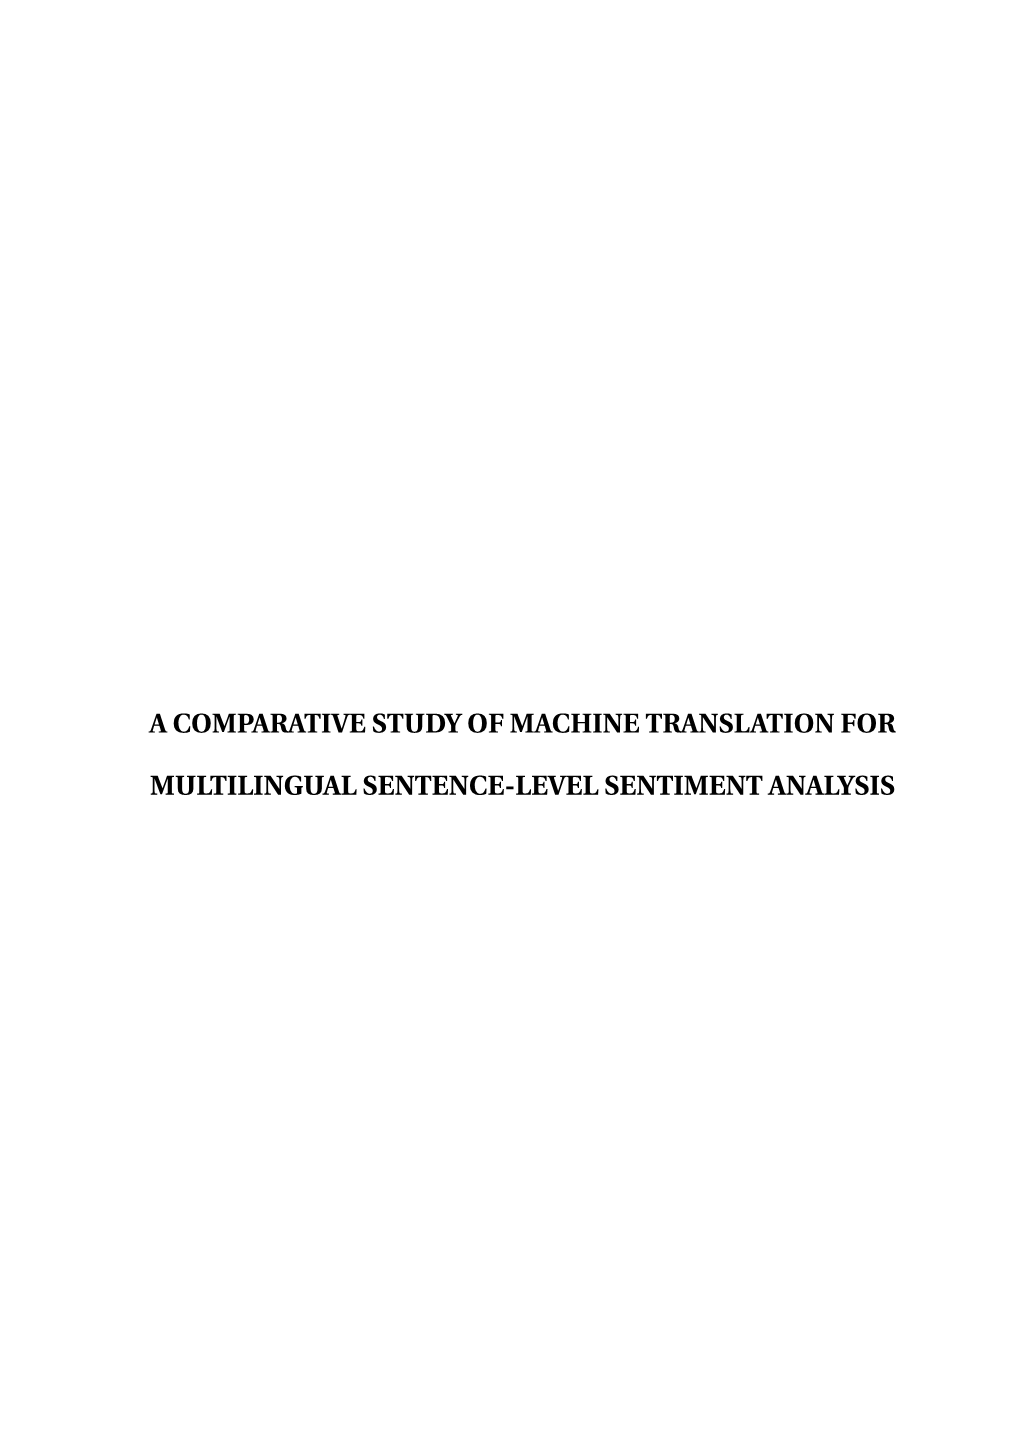 A Comparative Study of Machine Translation for Multilingual Sentence-Level Sentiment Analysis / Matheus Lima Diniz Araújo – Belo Horizonte, 2017